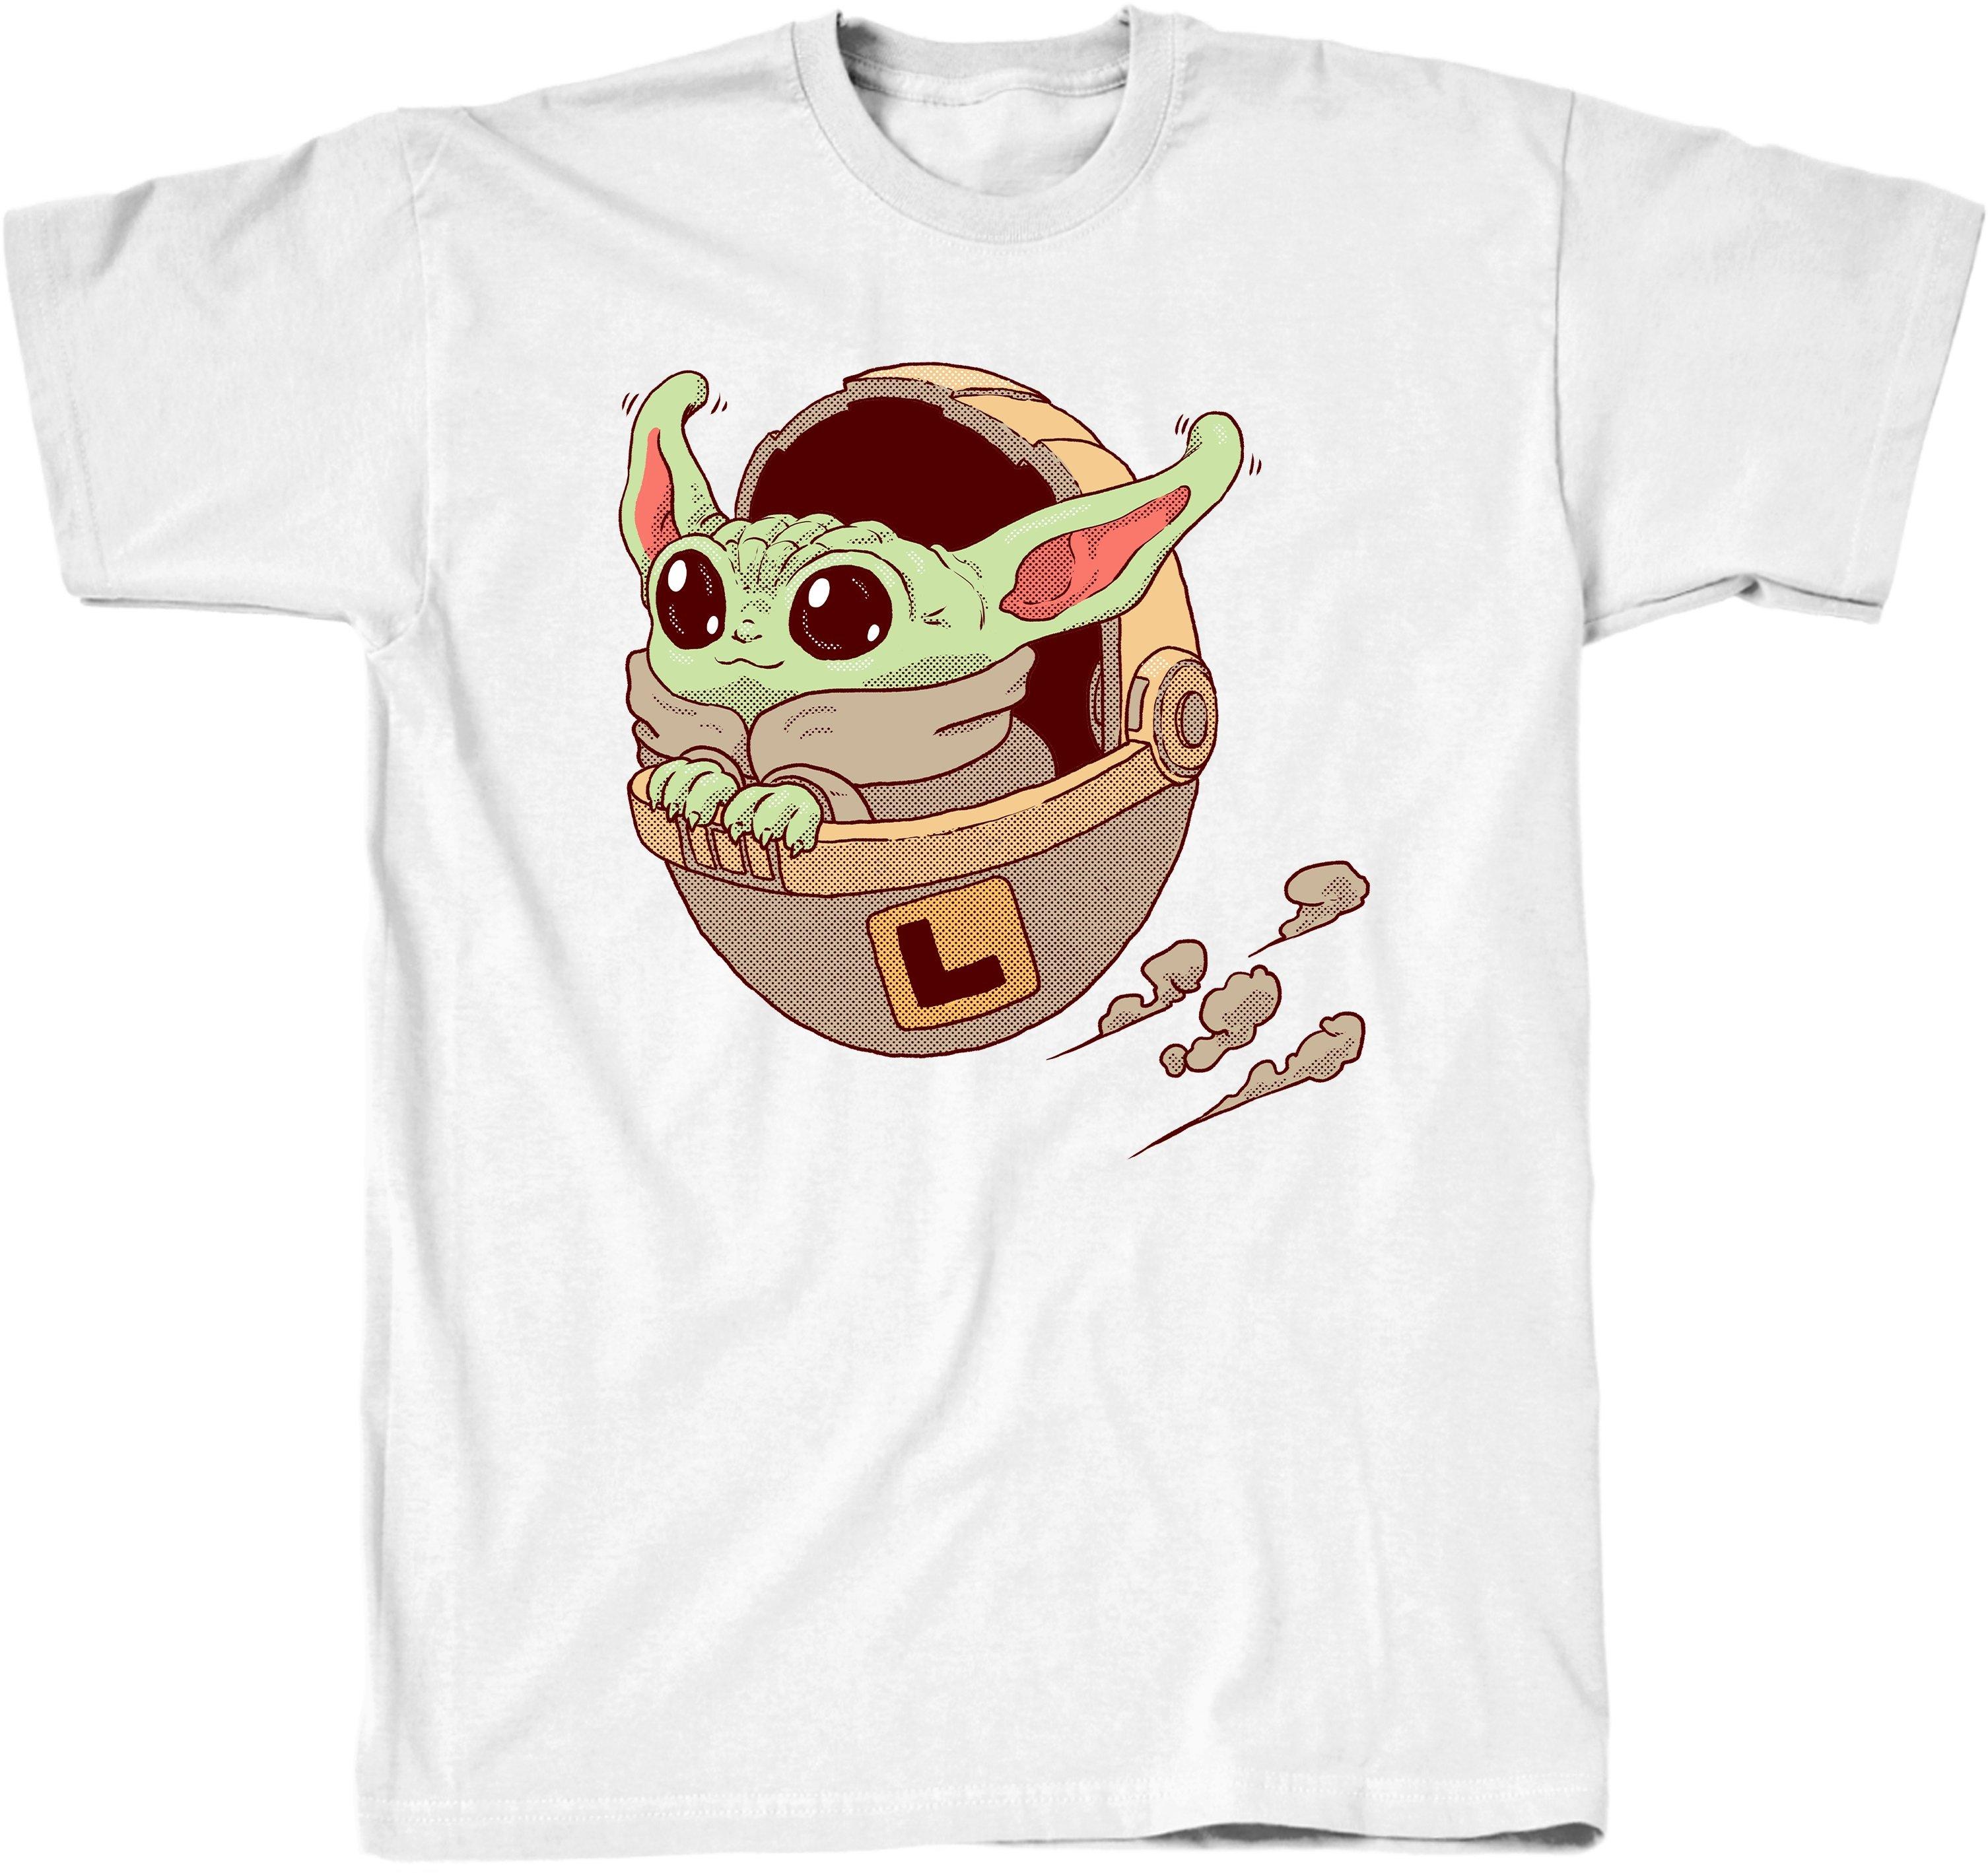 Star Wars: The Mandalorian The Child Plate T-Shirt